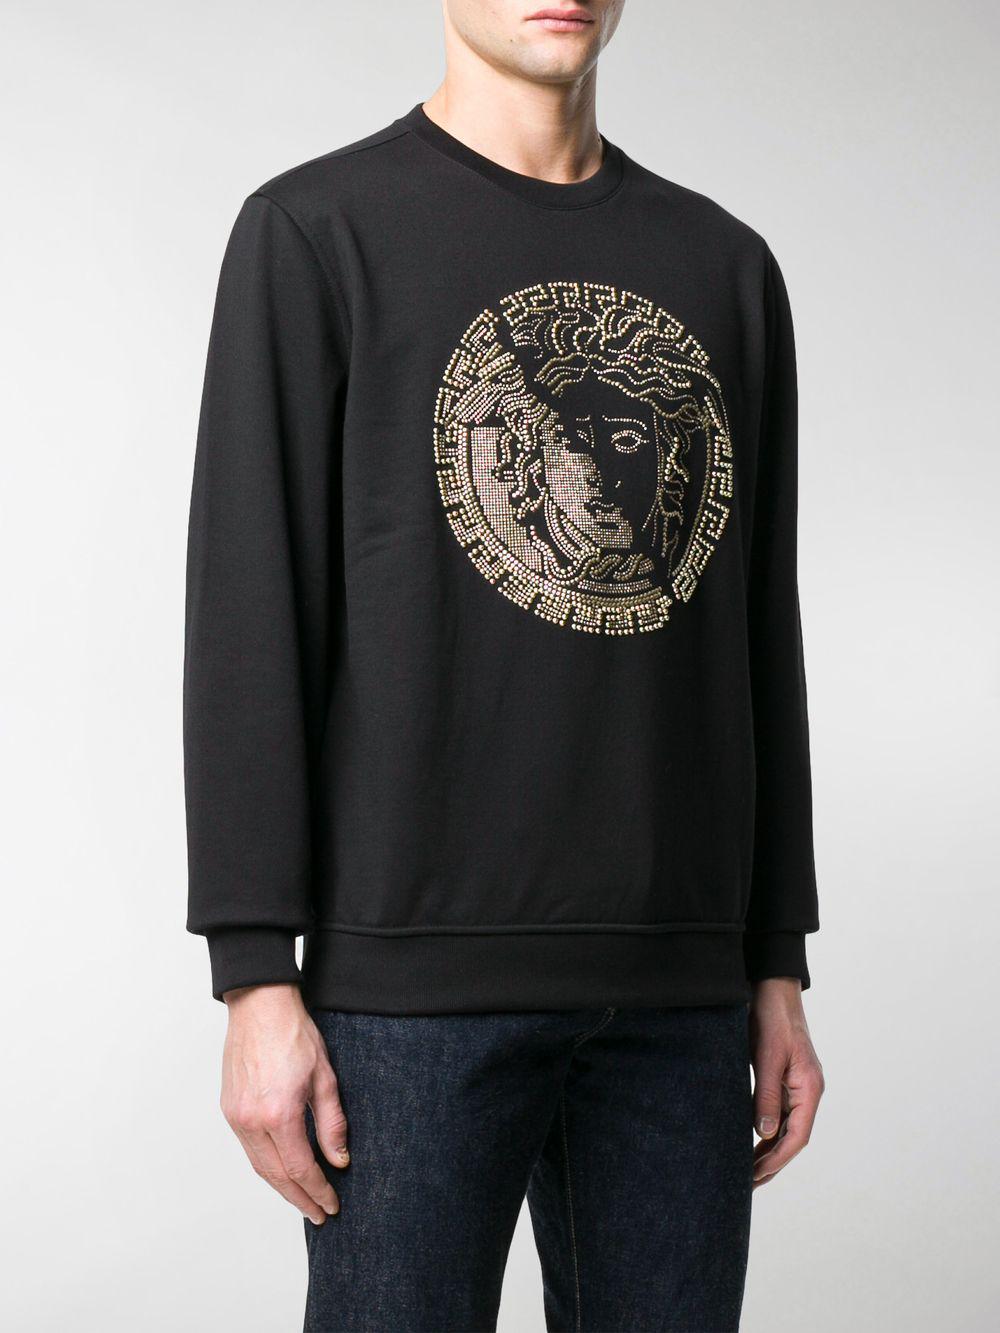 Versace Cotton Studded Medusa Logo Sweatshirt in Black for Men - Lyst